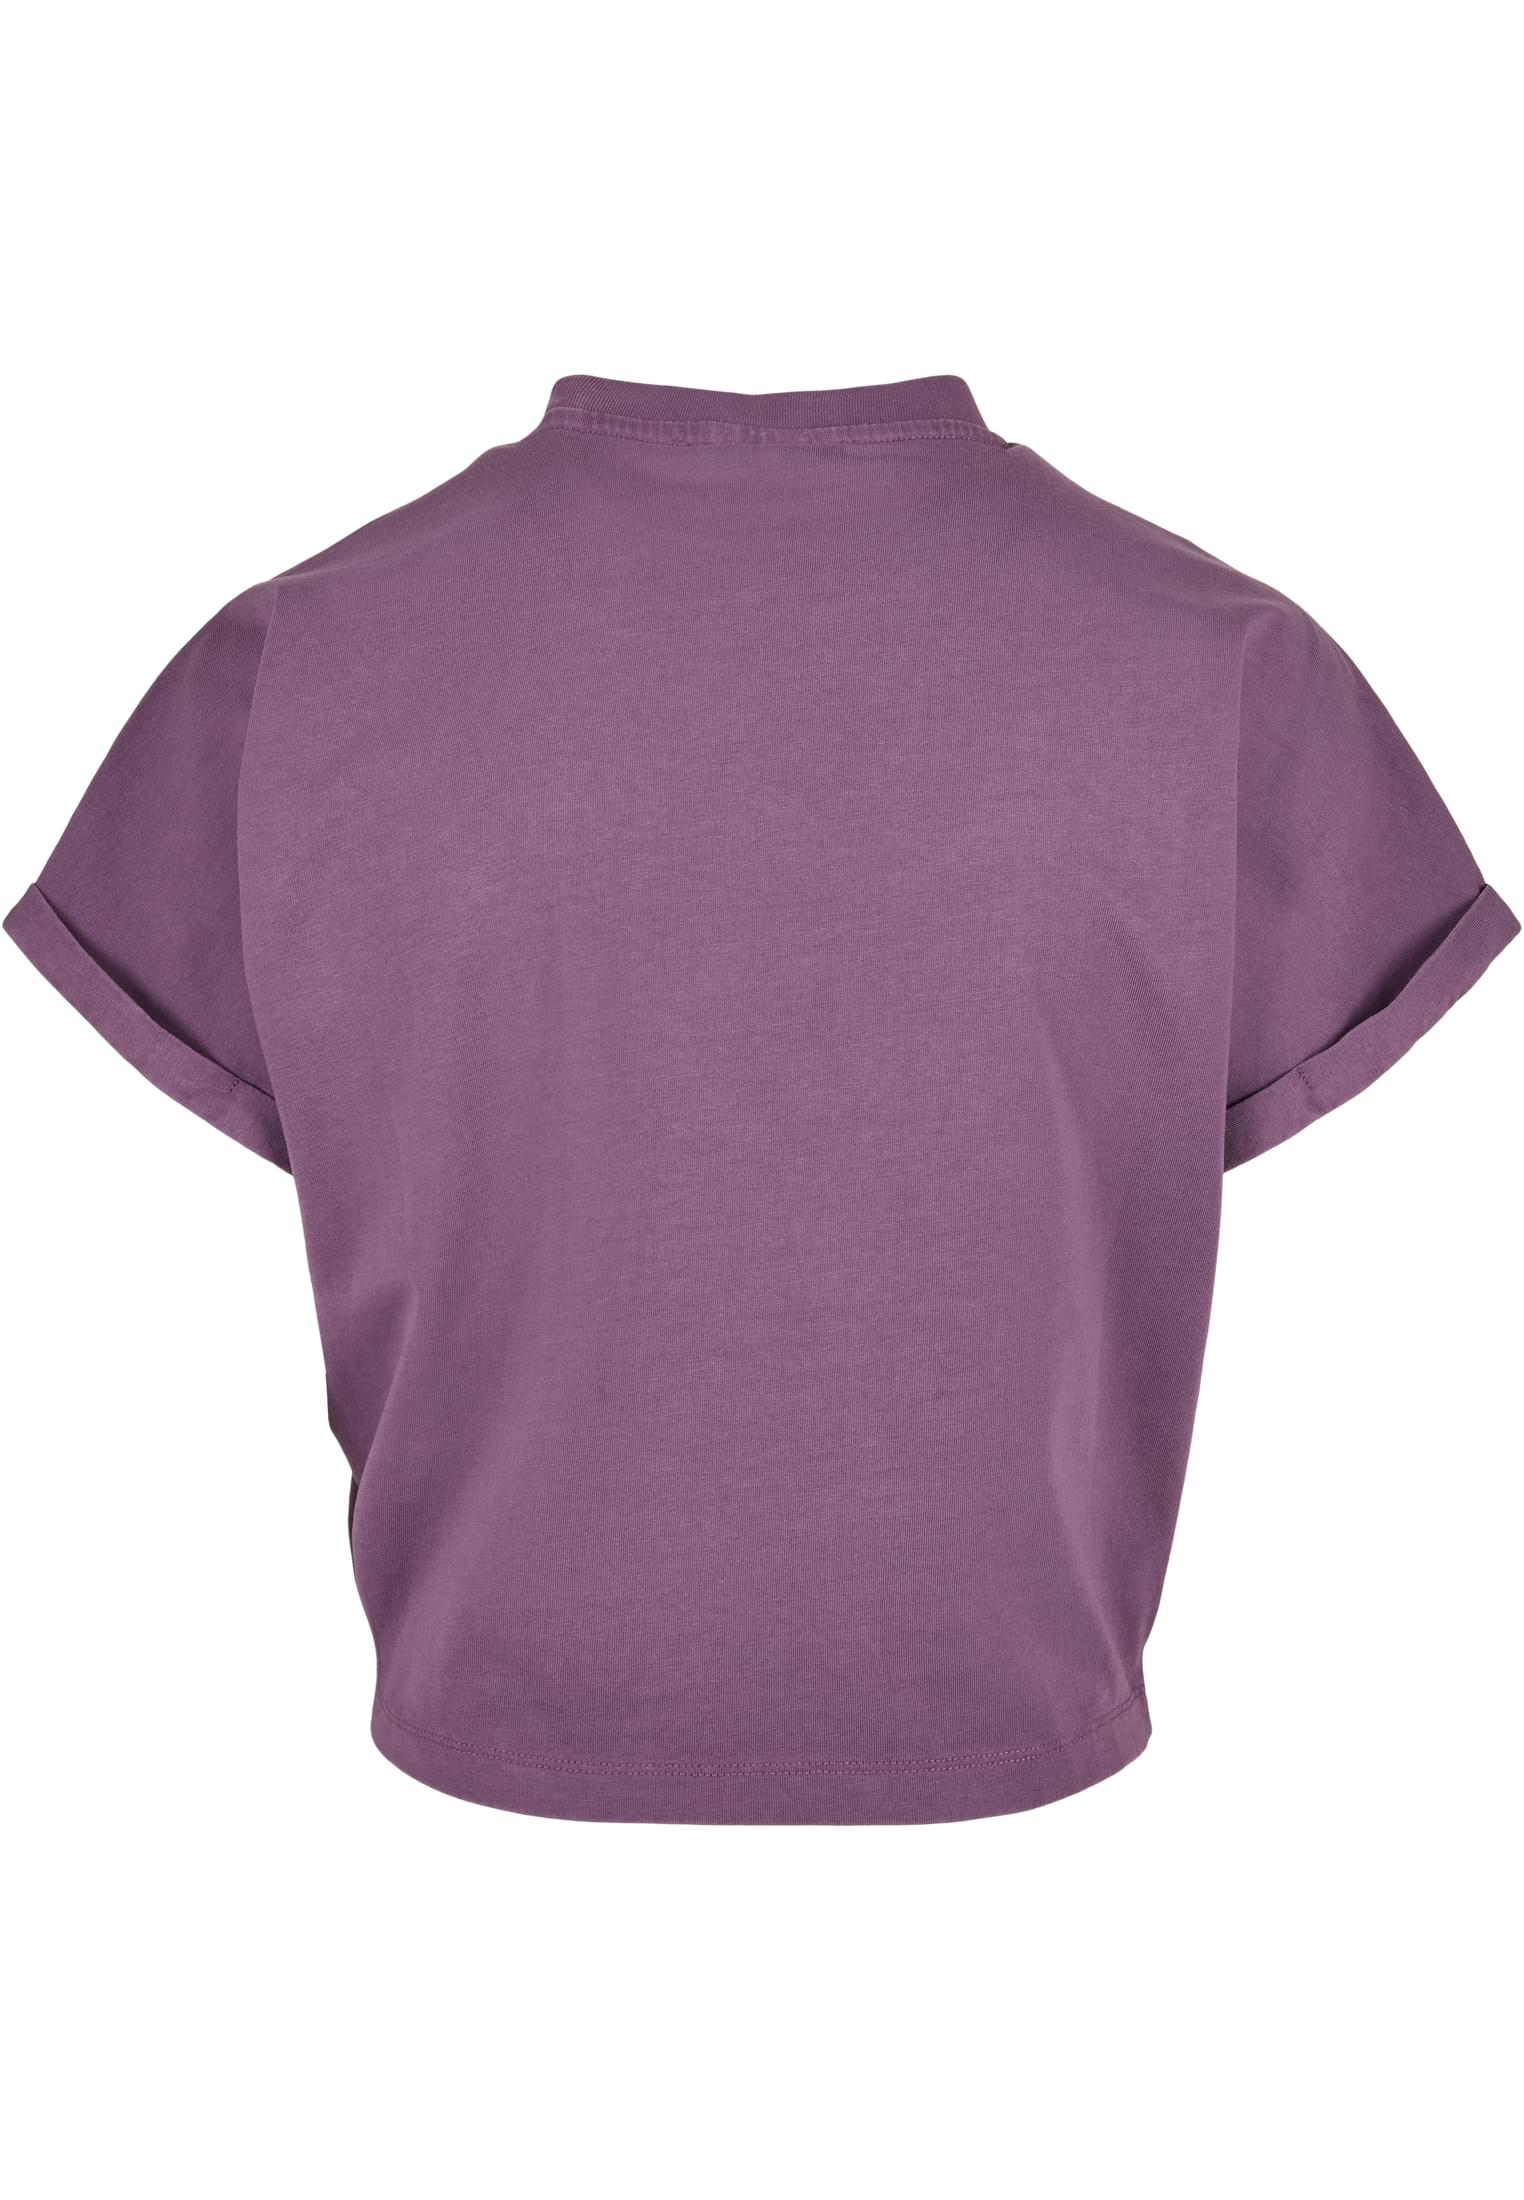 T-Shirts Ladies Short Pigment Dye Cut On Sleeve Tee in Farbe duskviolet